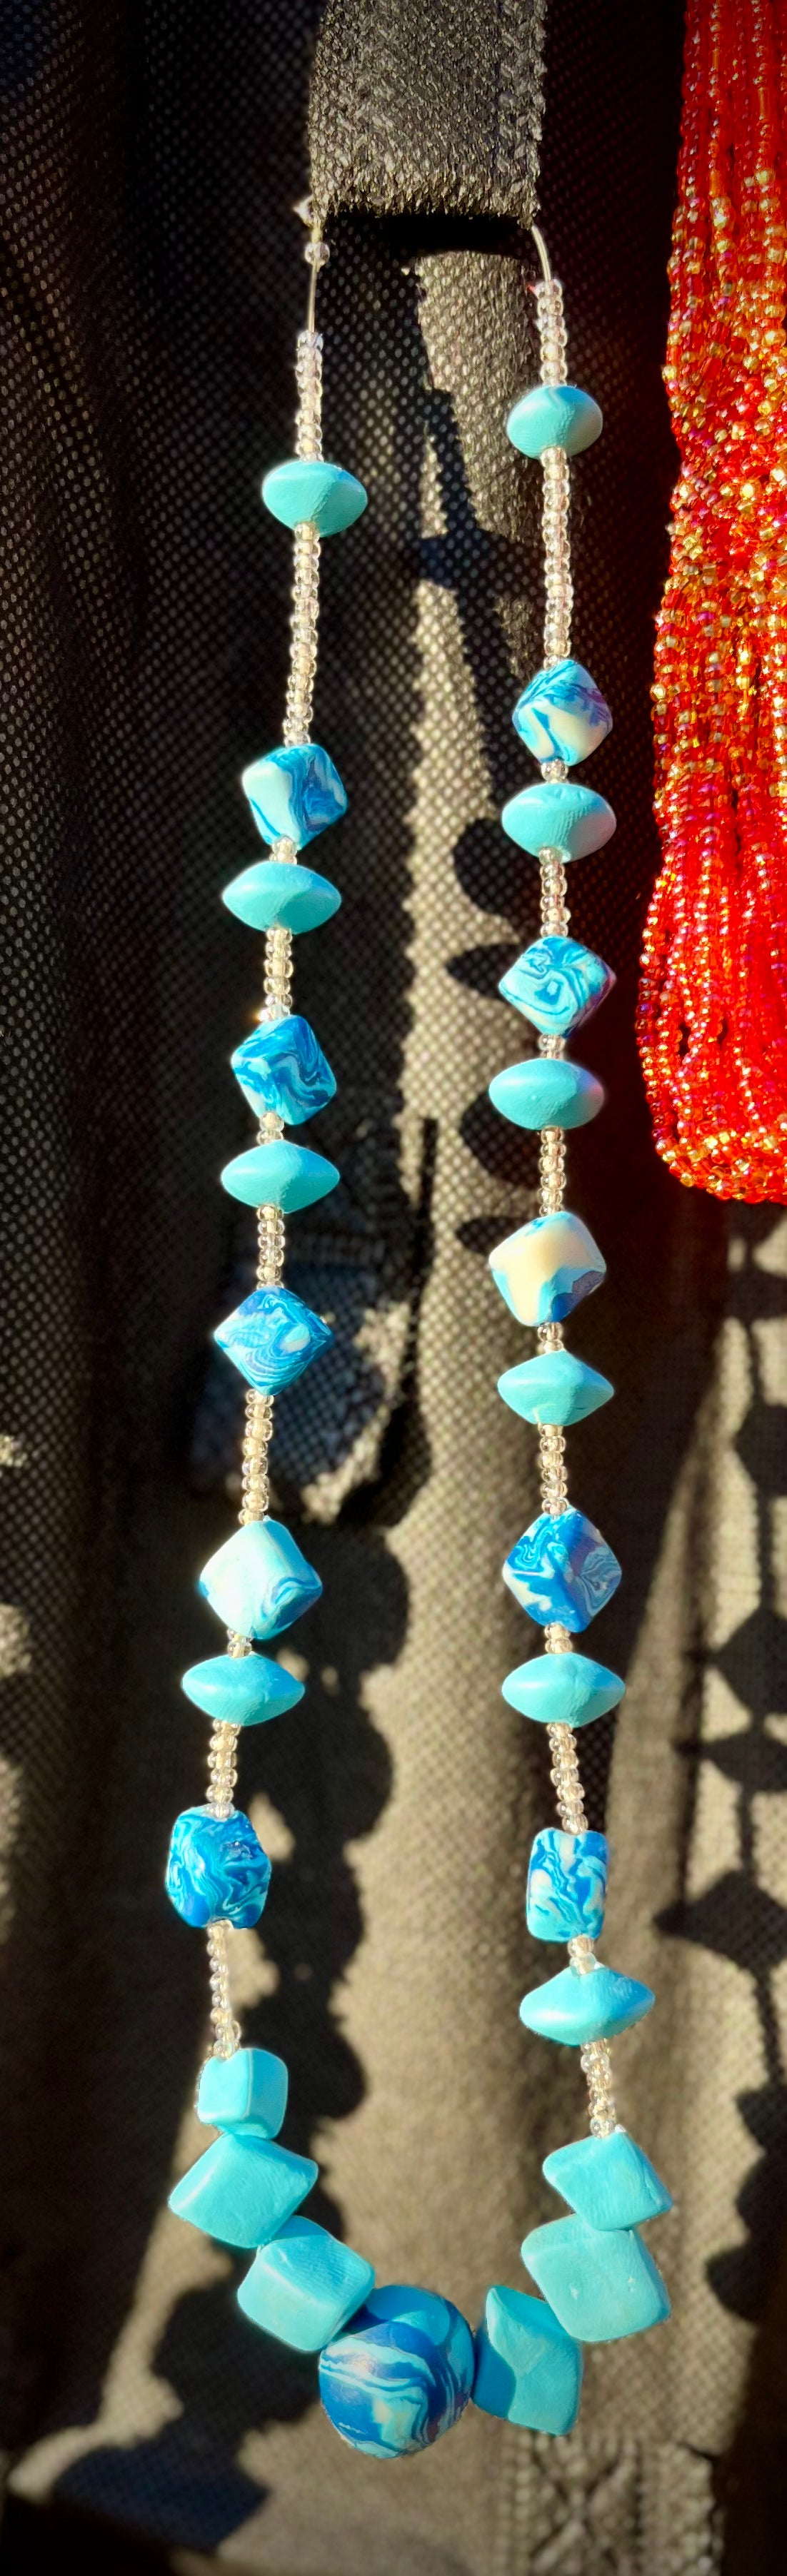 Collier de perles bleues